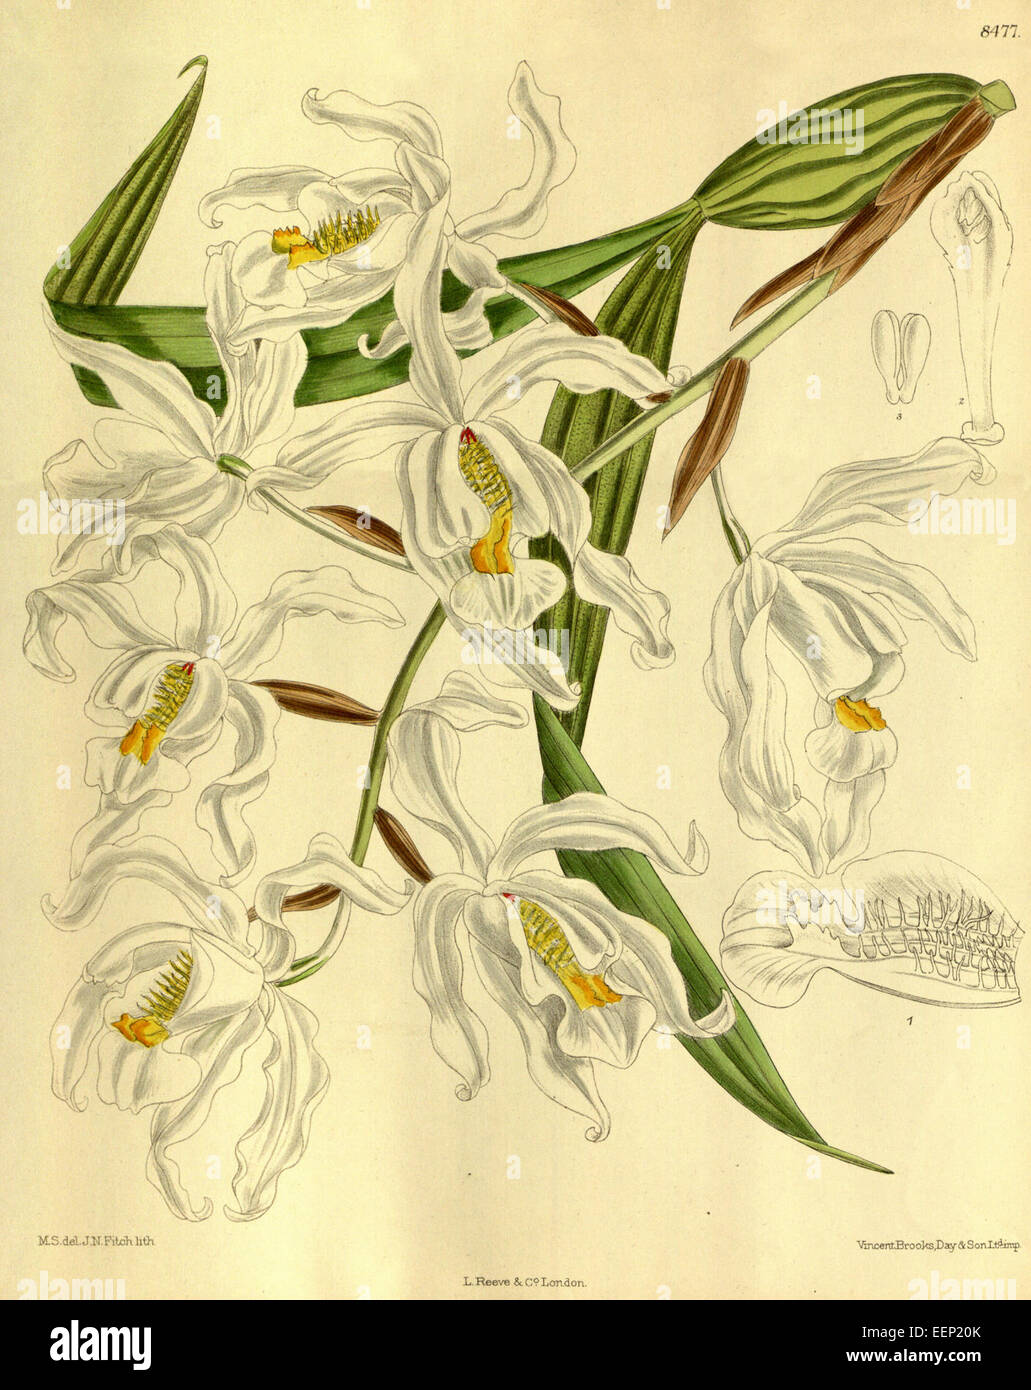 Coelogyne cristata - Curtis' 139 (Ser. 4 no. 9) pl. 8477 (1913) Stock Photo